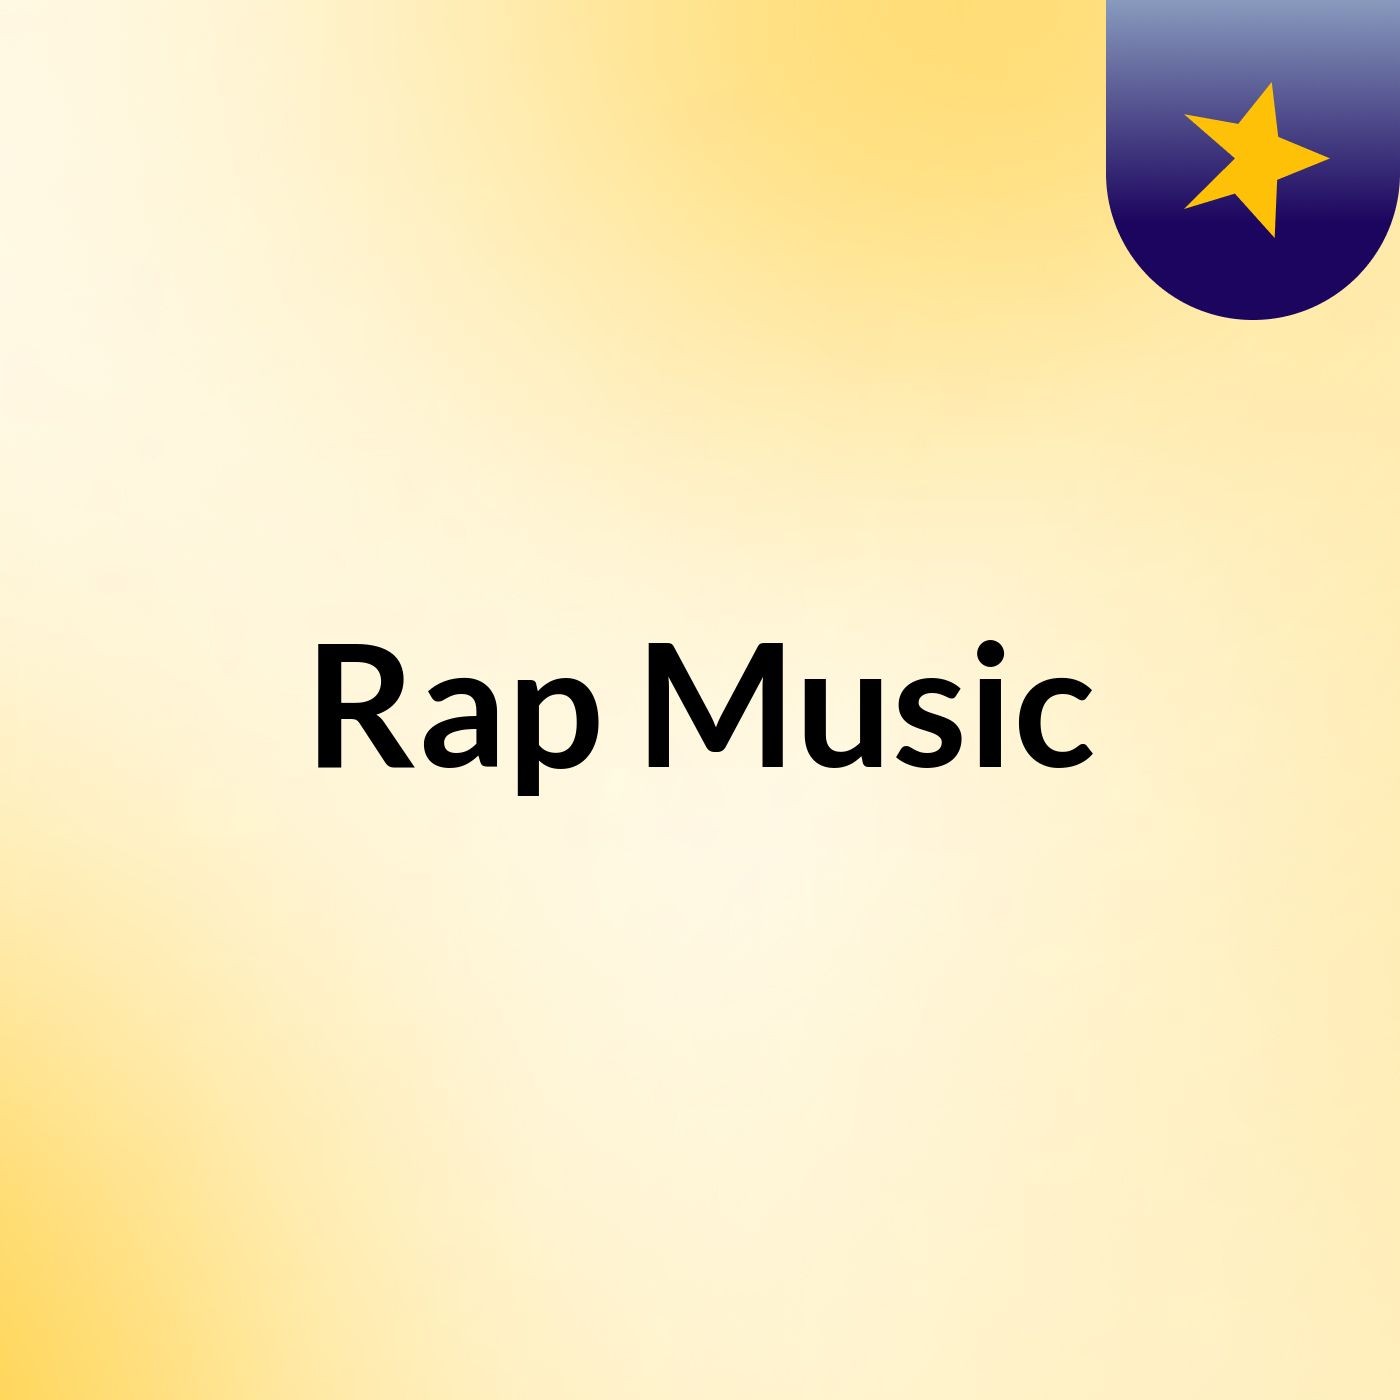 Episode 3 - Rap Music